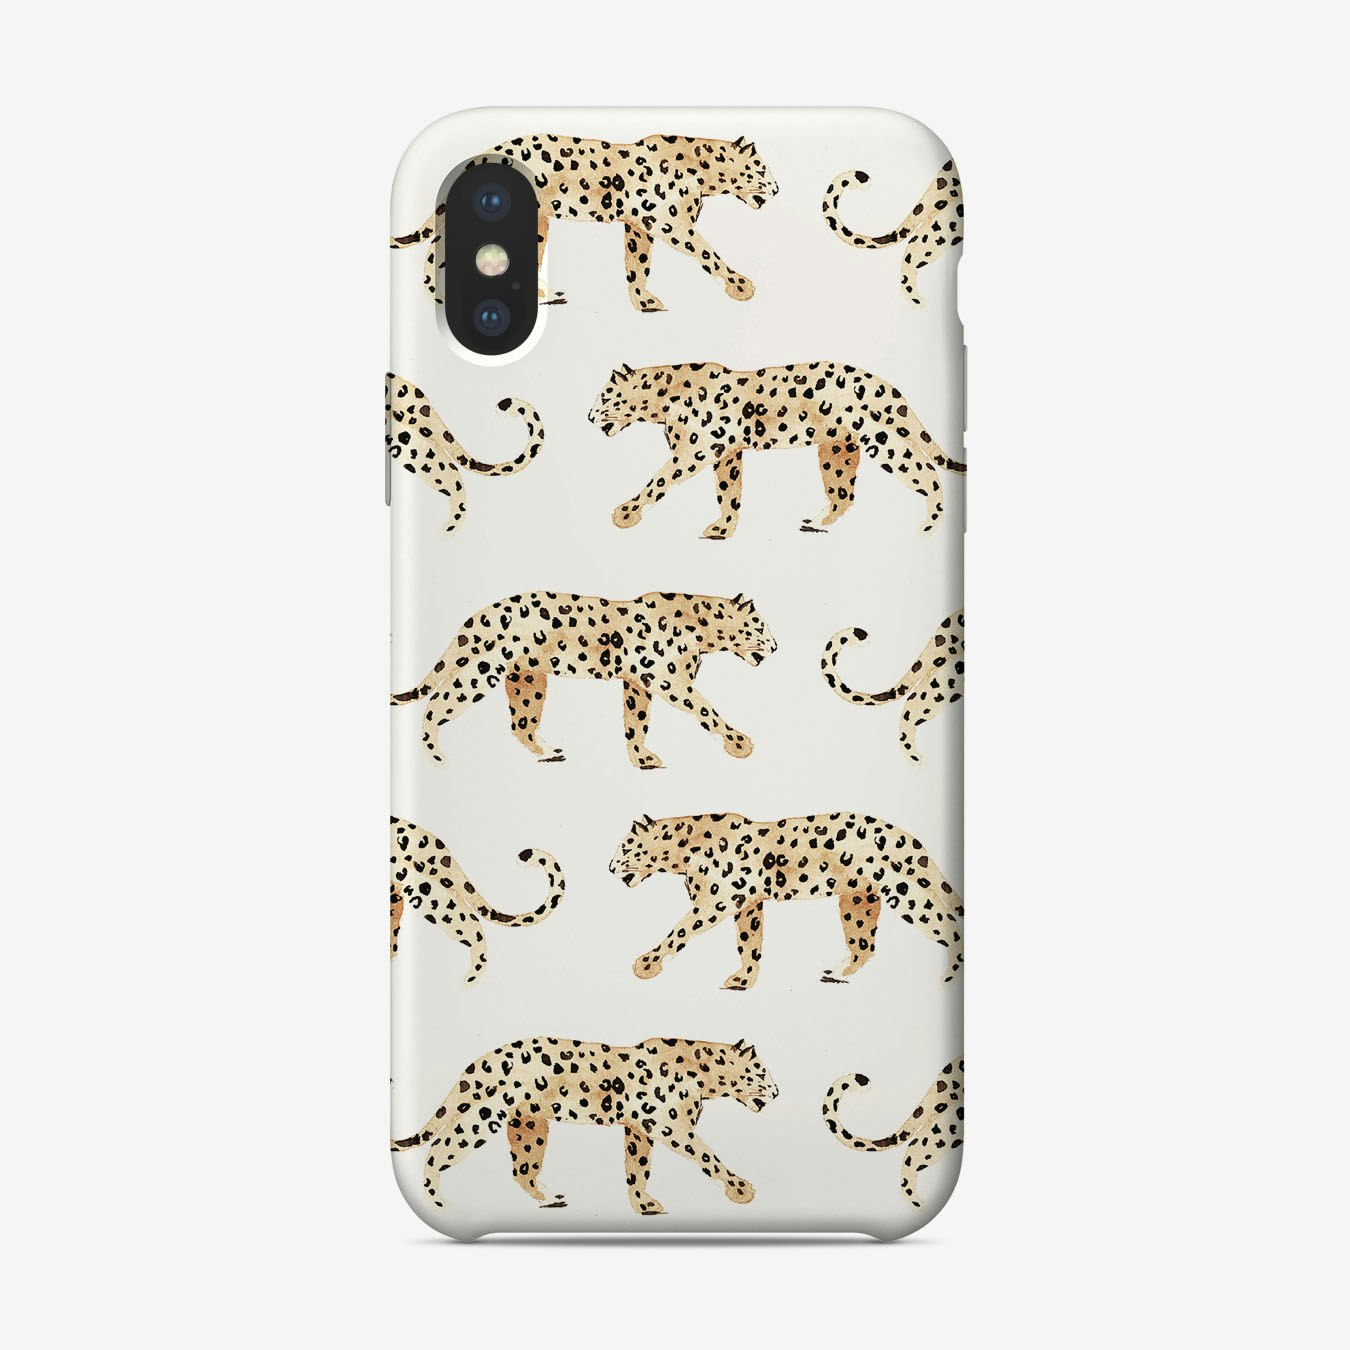 Leopard iPhone Case by Weelink Design - Fy